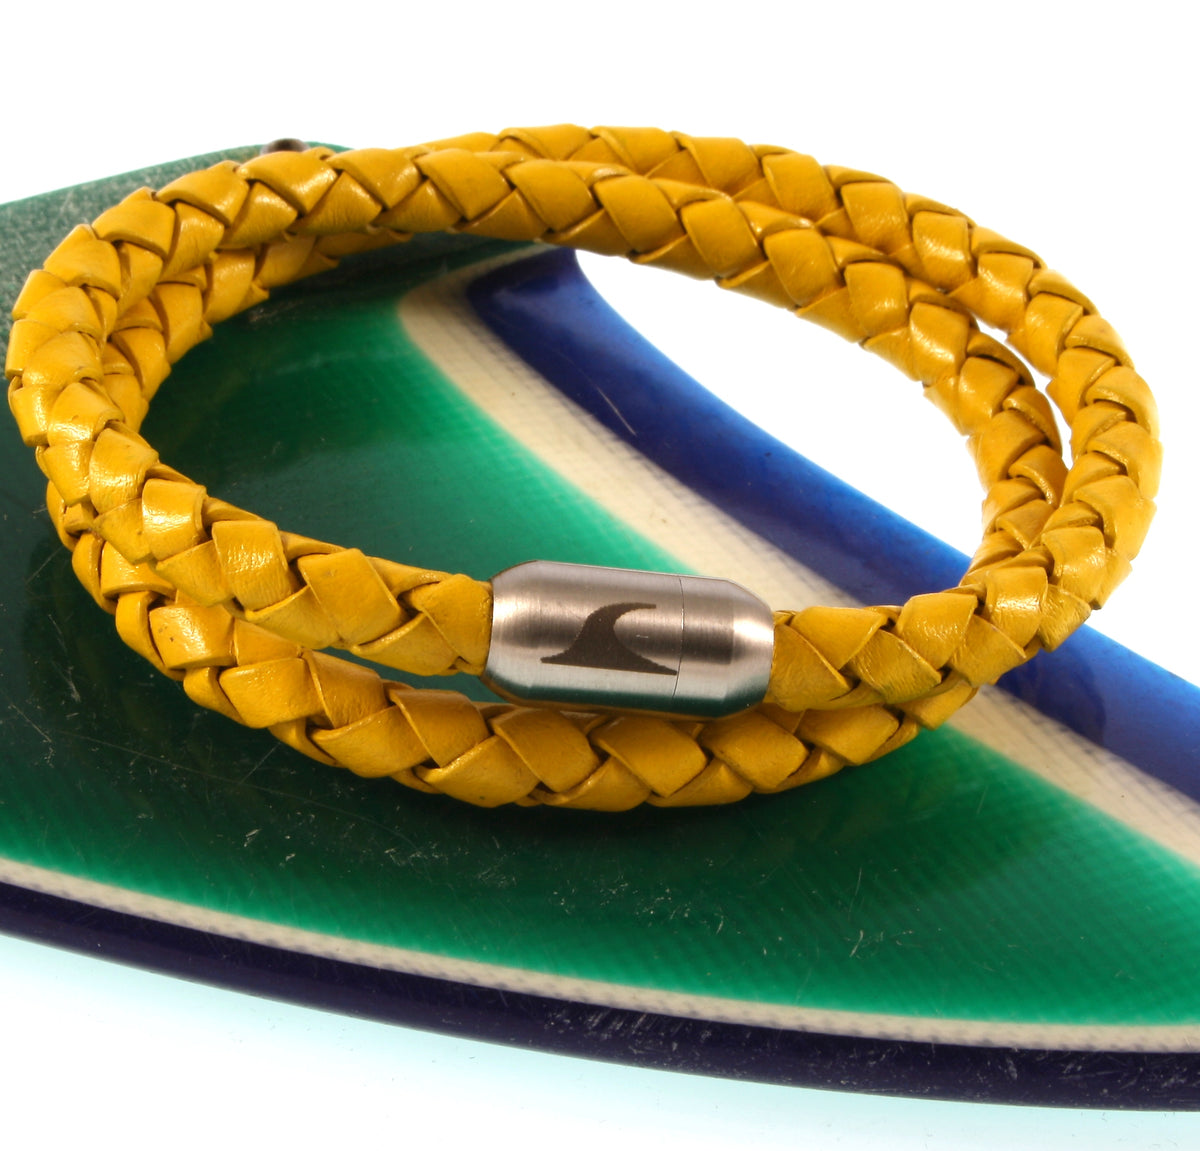 Herren-Leder-Armband-hawaii-gelb-geflochten-Edelstahlverschluss-detail-wavepirate-shop-f